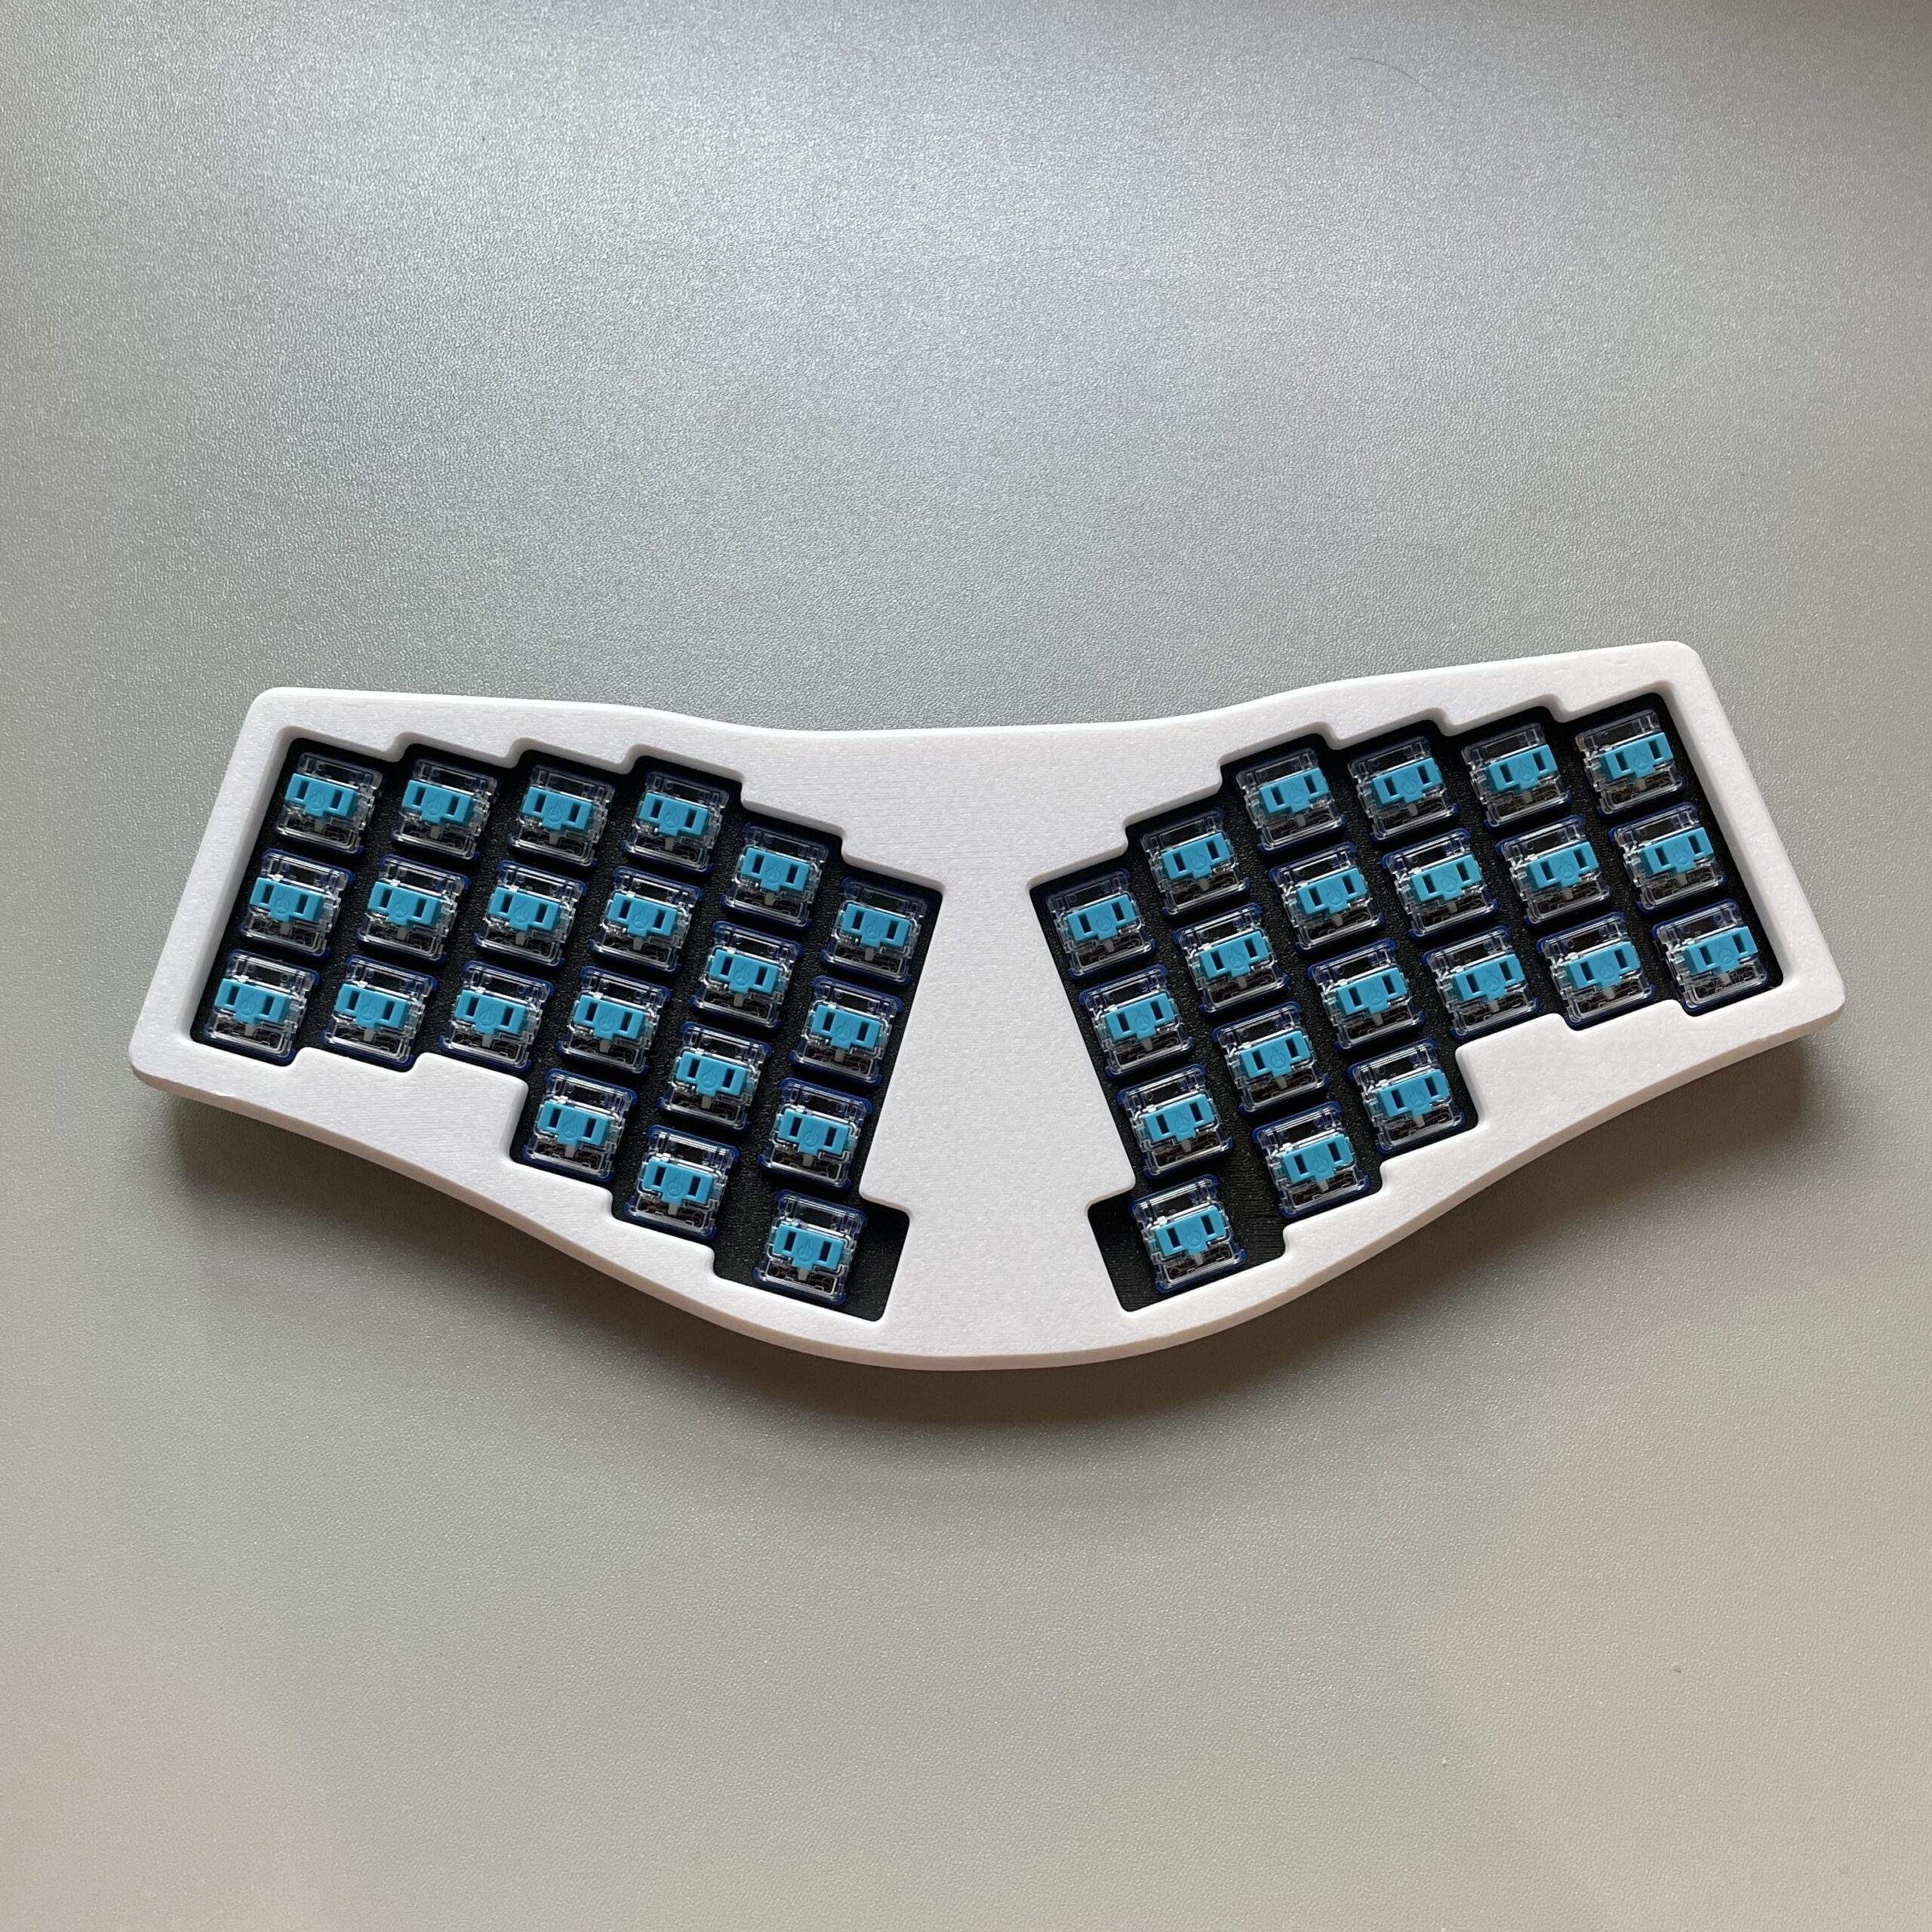 Zerosprey42 MonoBlockSplit Unibody RP2040 Wired Keyboard Kit